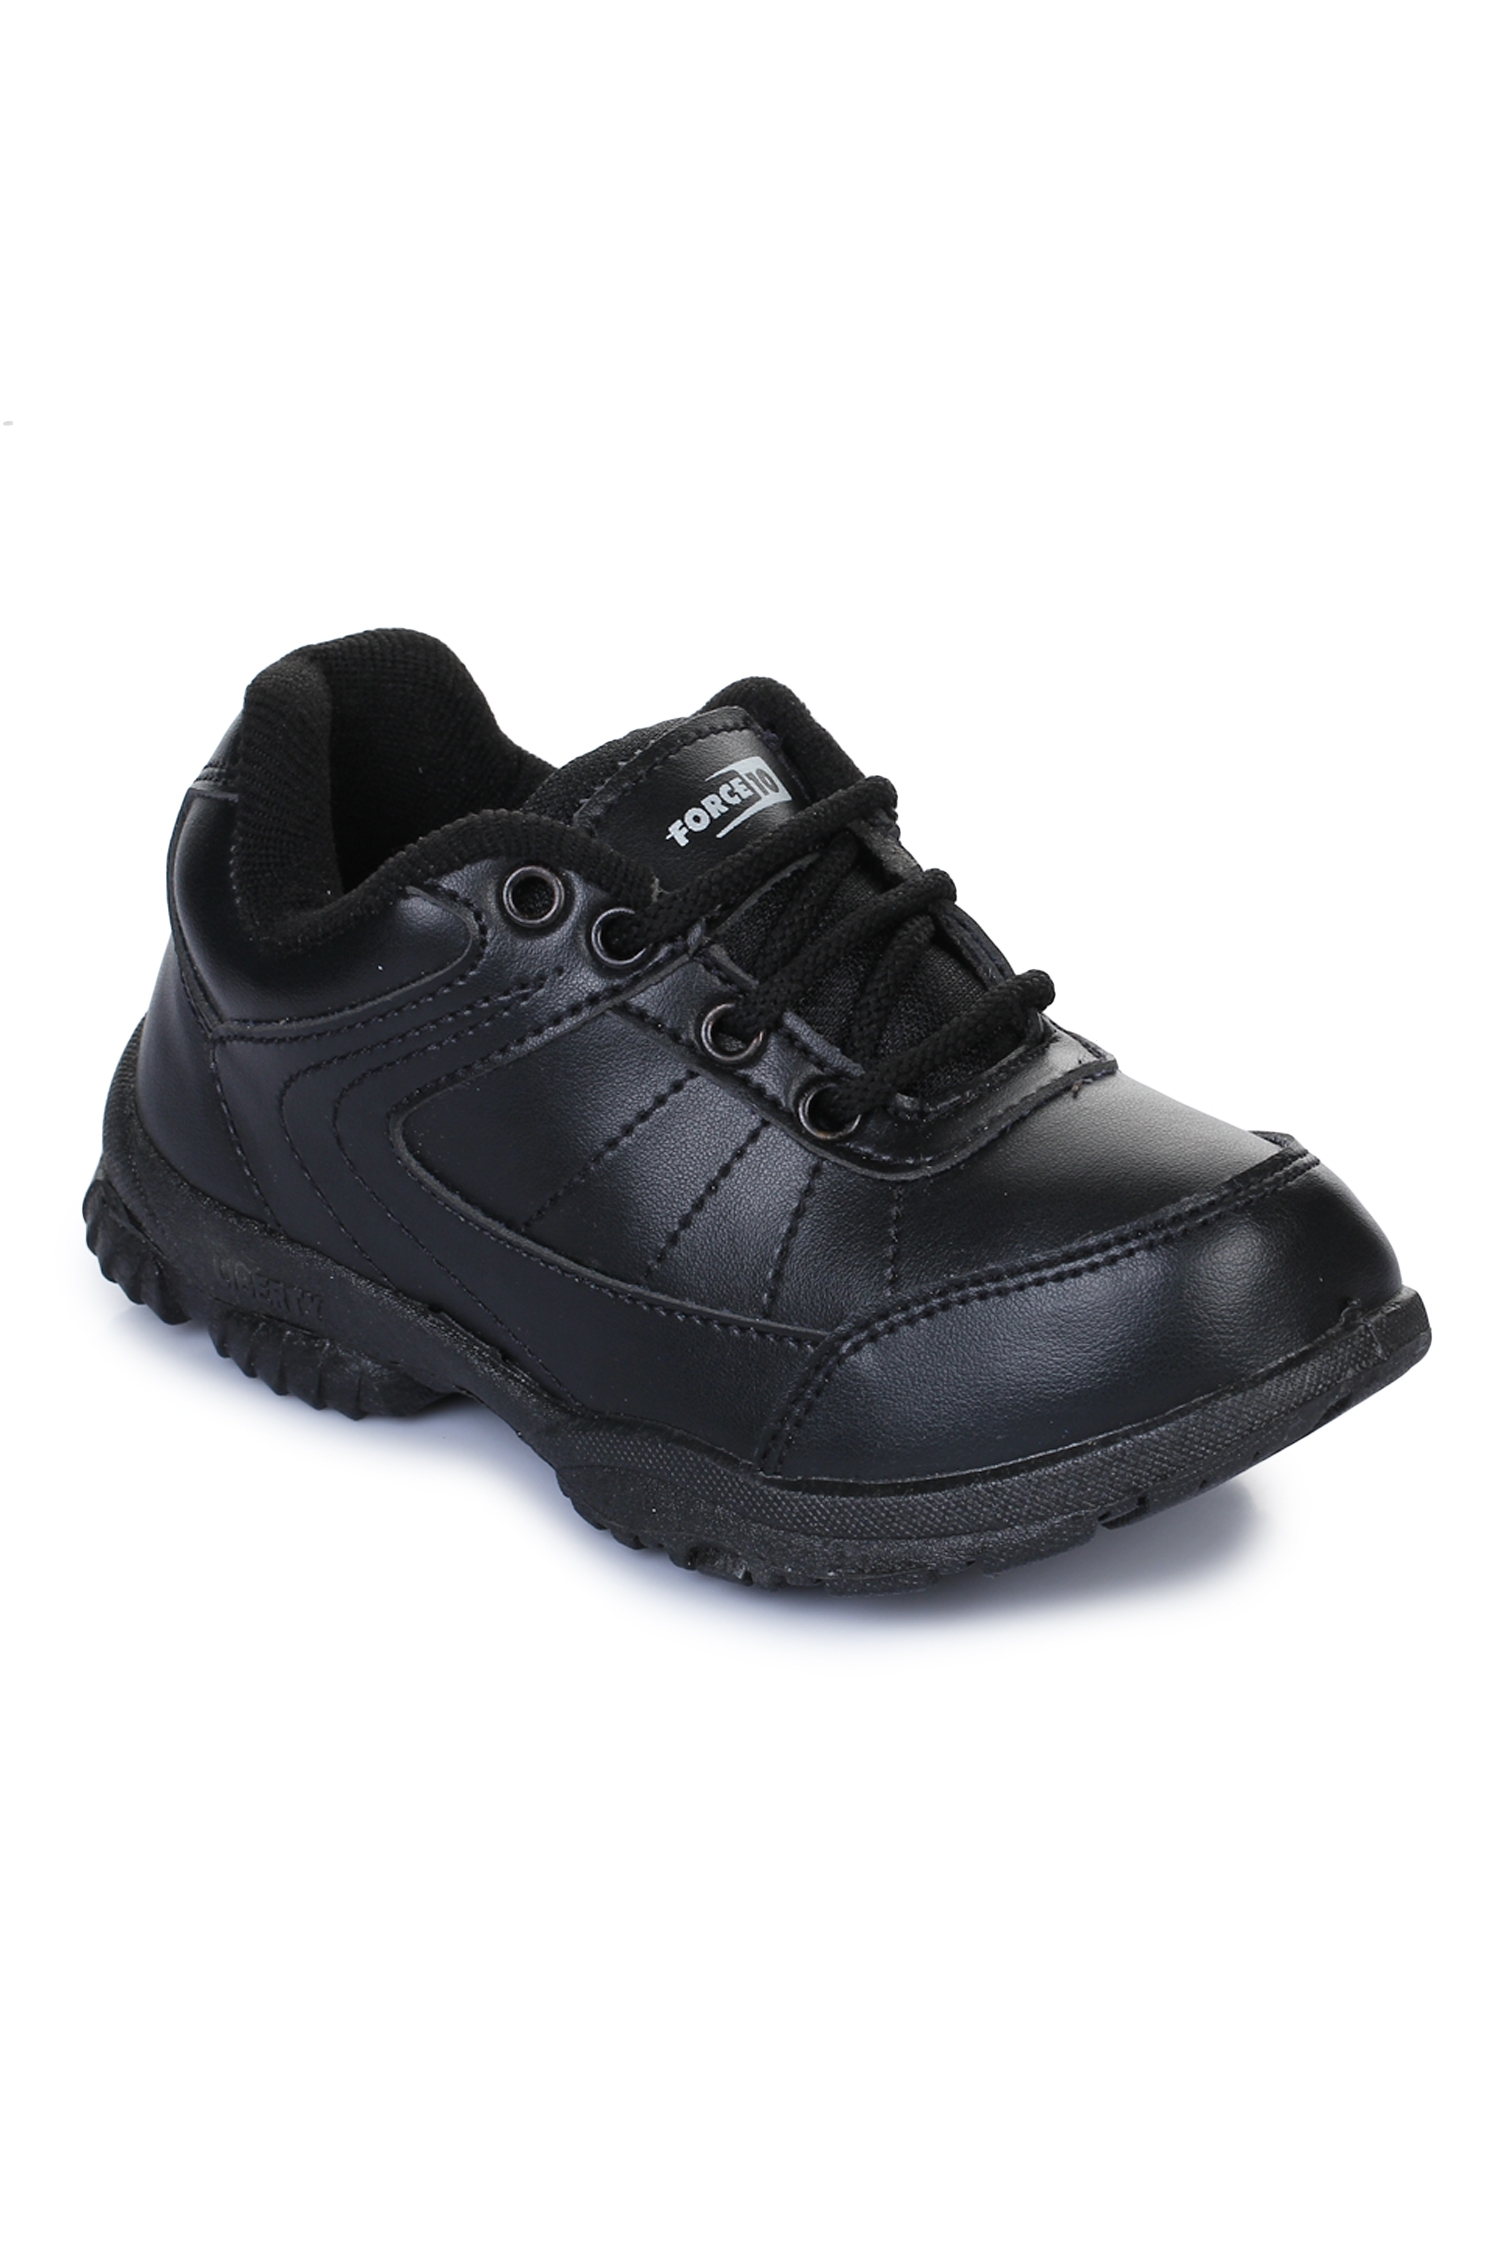 Liberty | Liberty FORCE 10 School Shoes SCHZONE_BLACK For - Boys